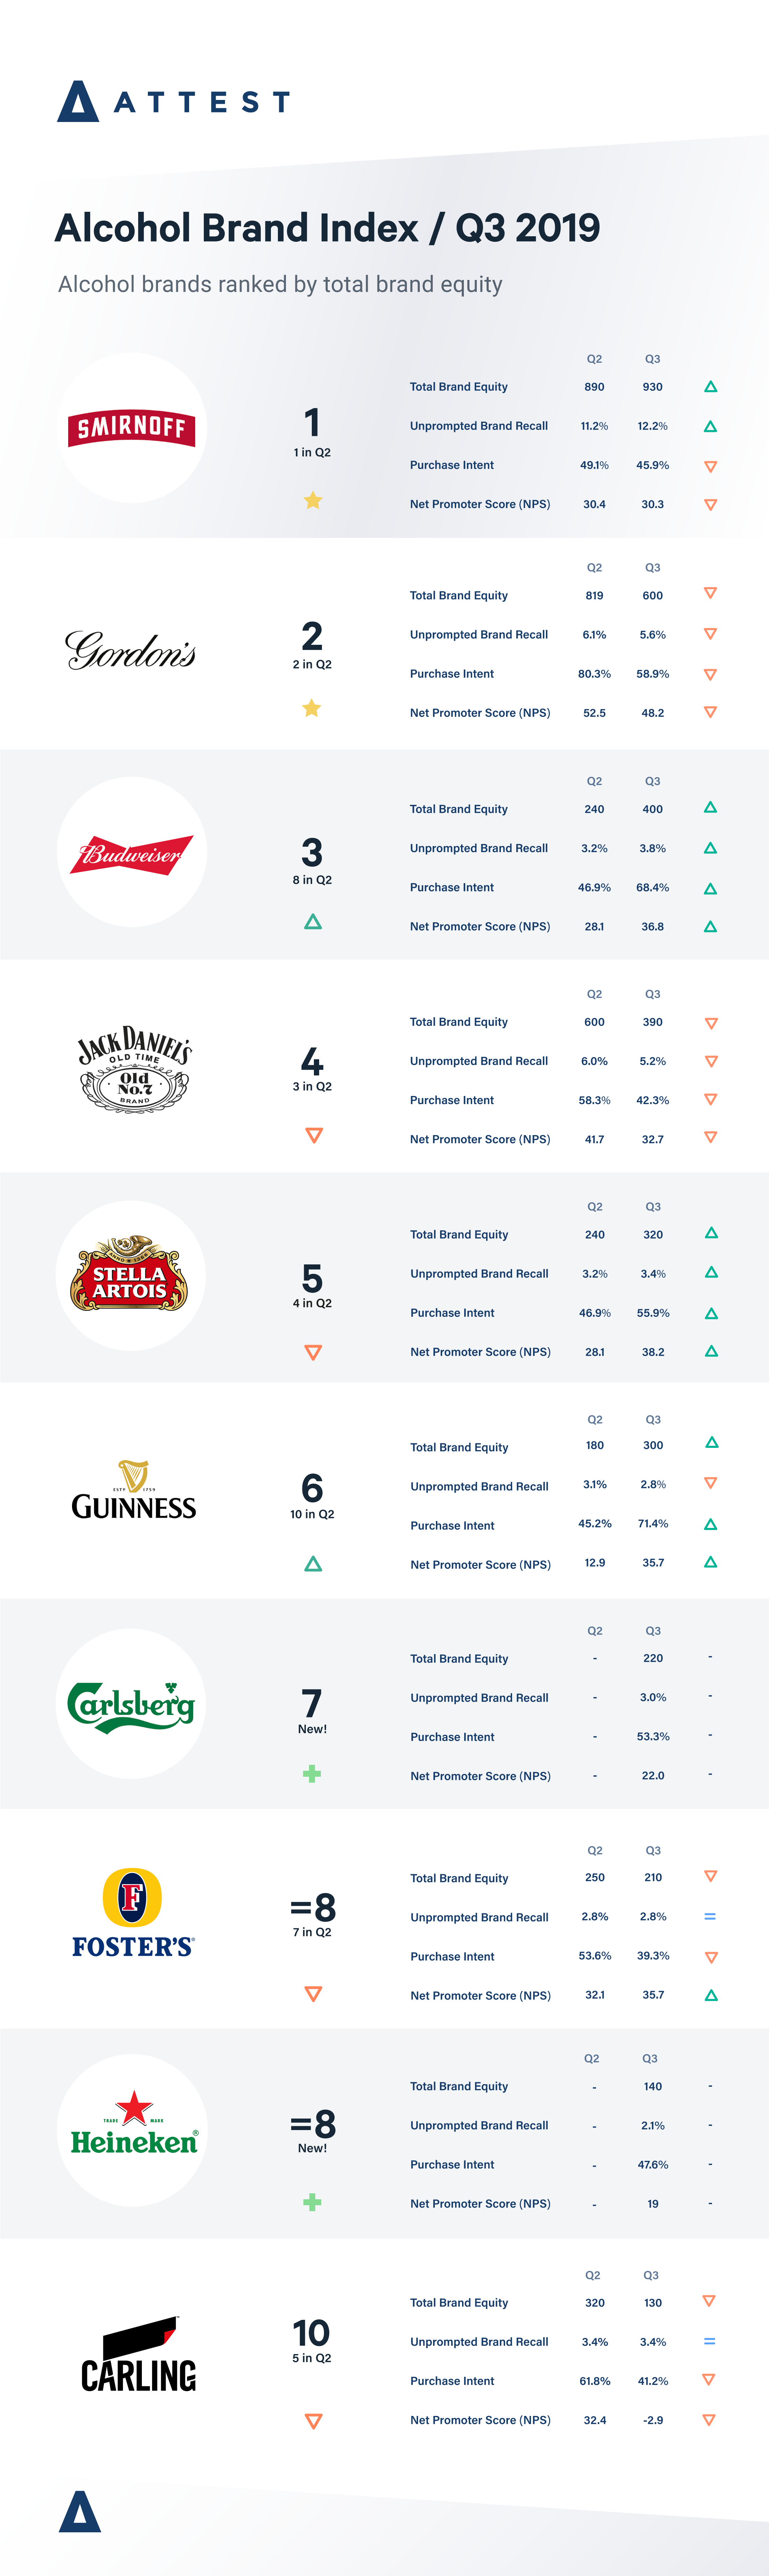 Alcohol brand index rankings 2019 Q3
